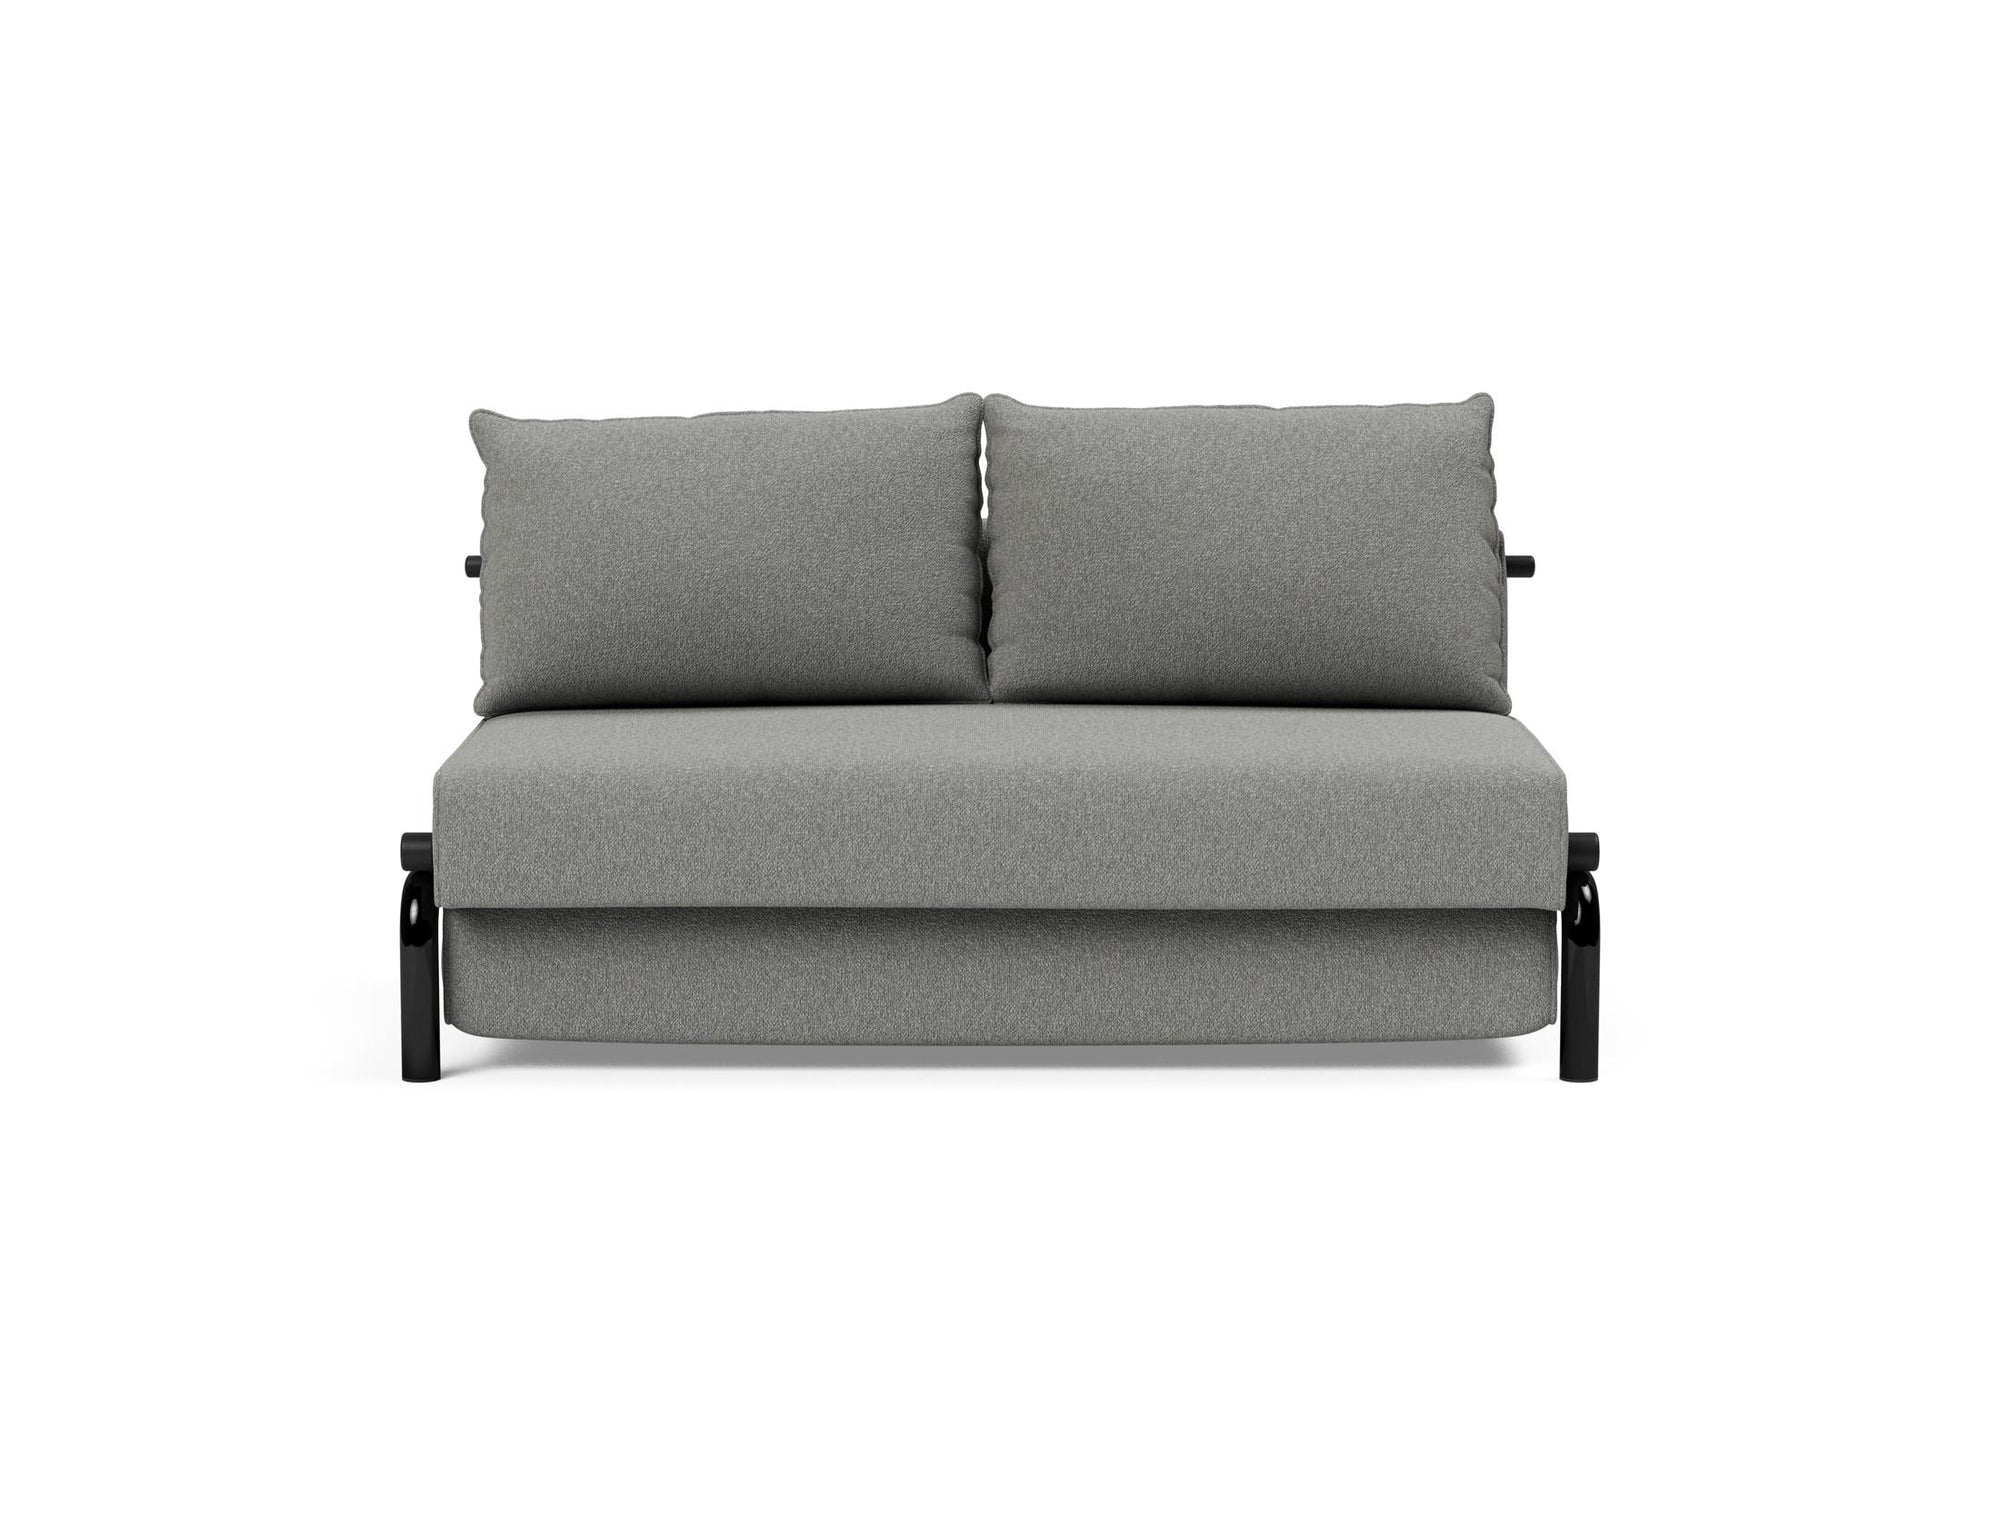 RAMONE Sofa bed 140 cm